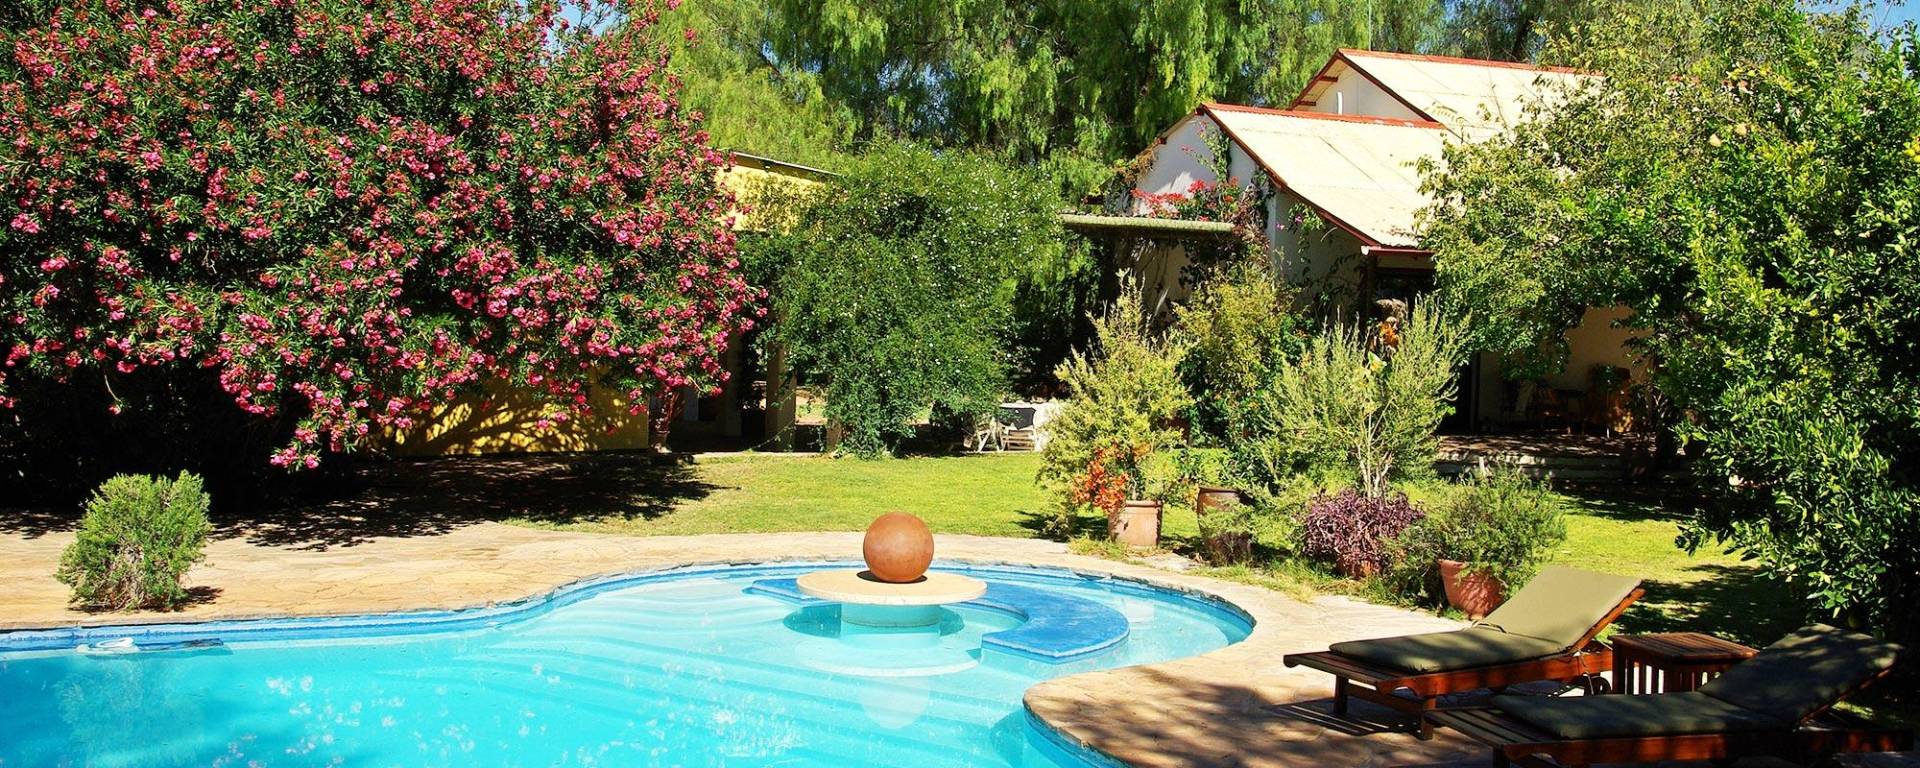 Pool and garden at Kuzikus Guestlodge